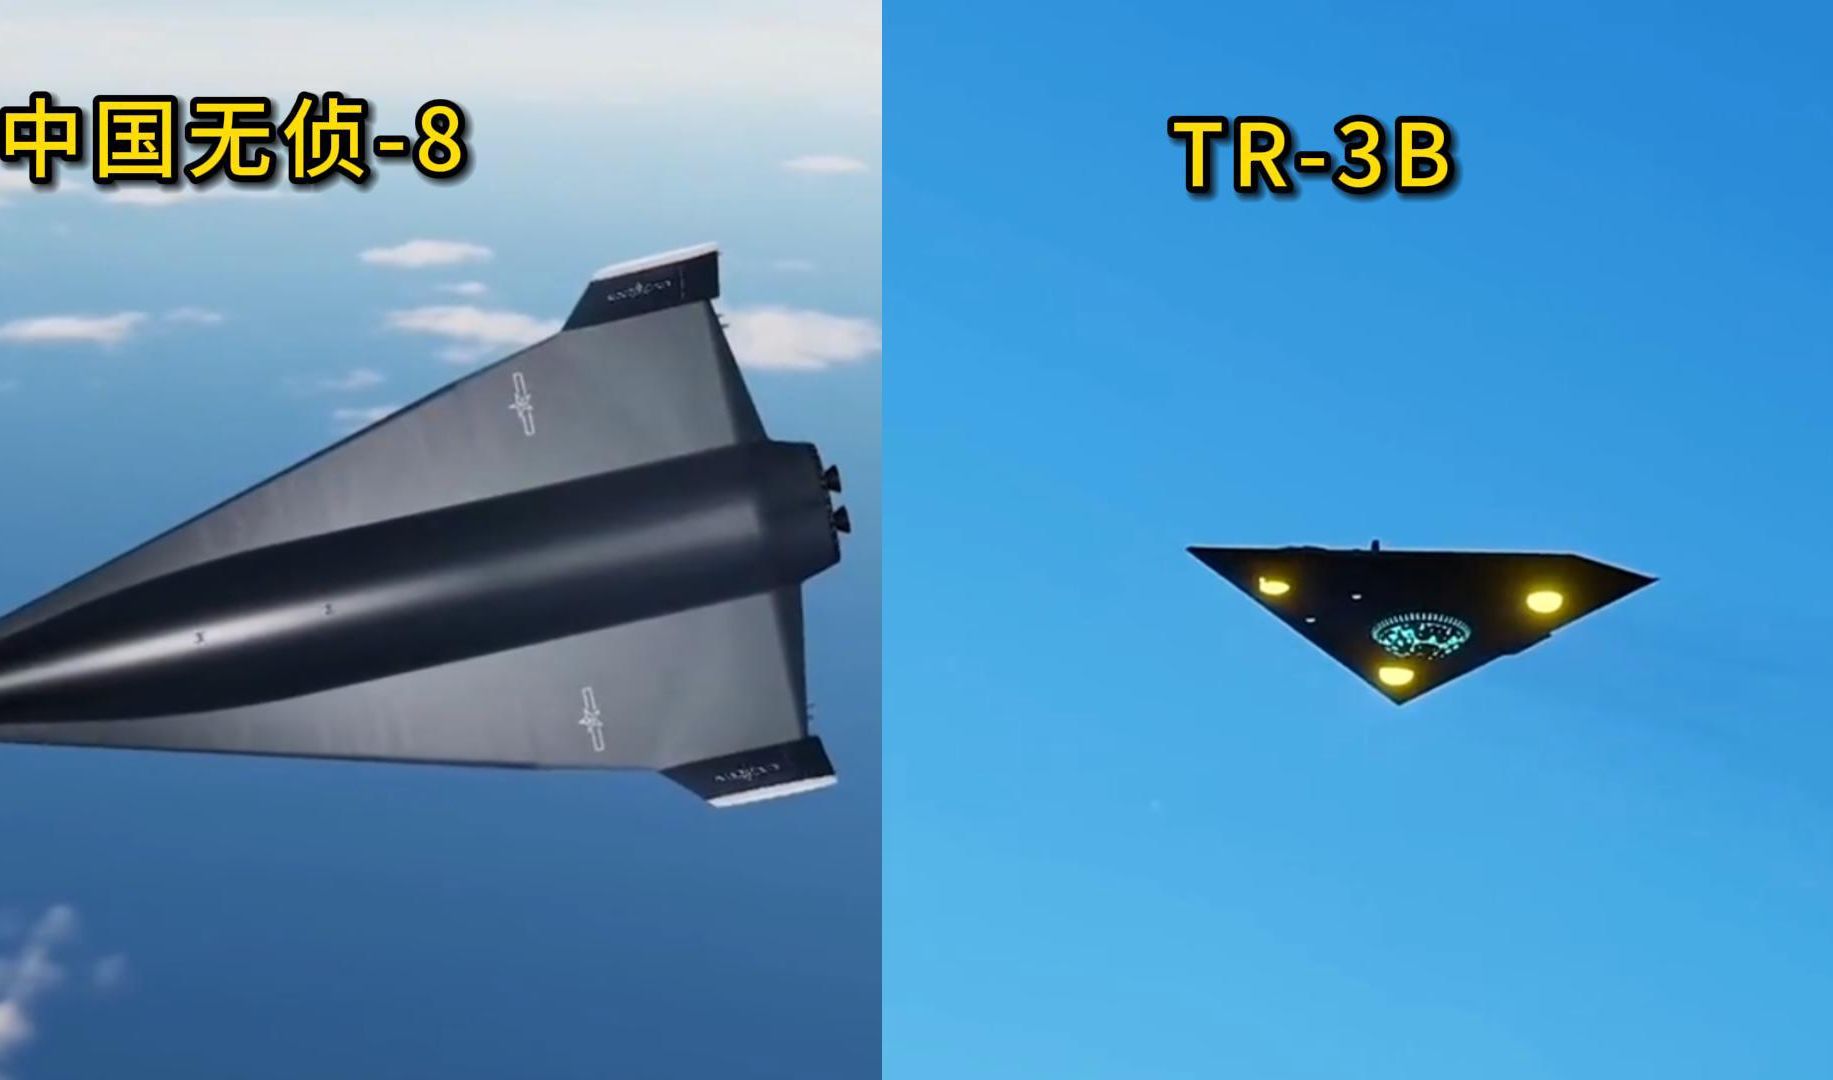 TR-3B反重力飞行器，它真是人类获取的外星科技而研制的吗？